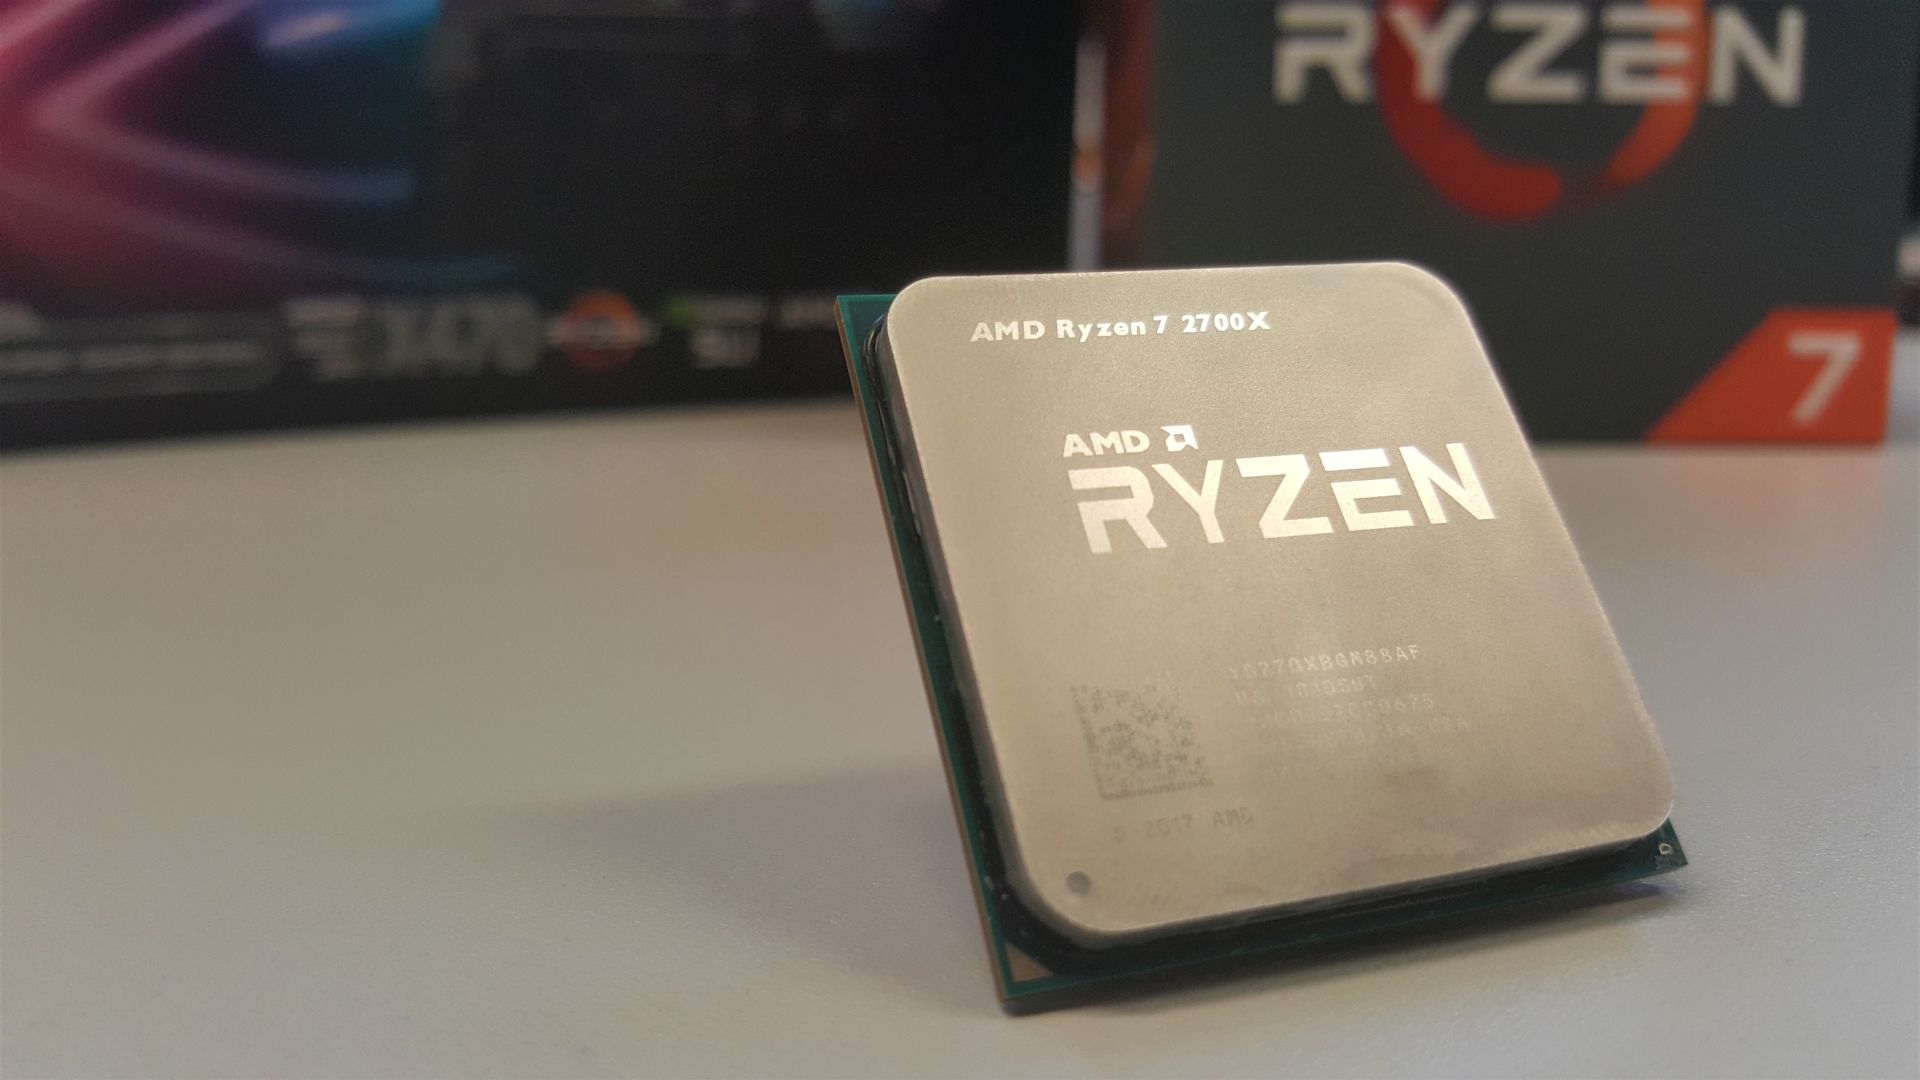 AMD Ryzen 7 2700X review: the Intel Coffee Lake CPU killer | PCGamesN